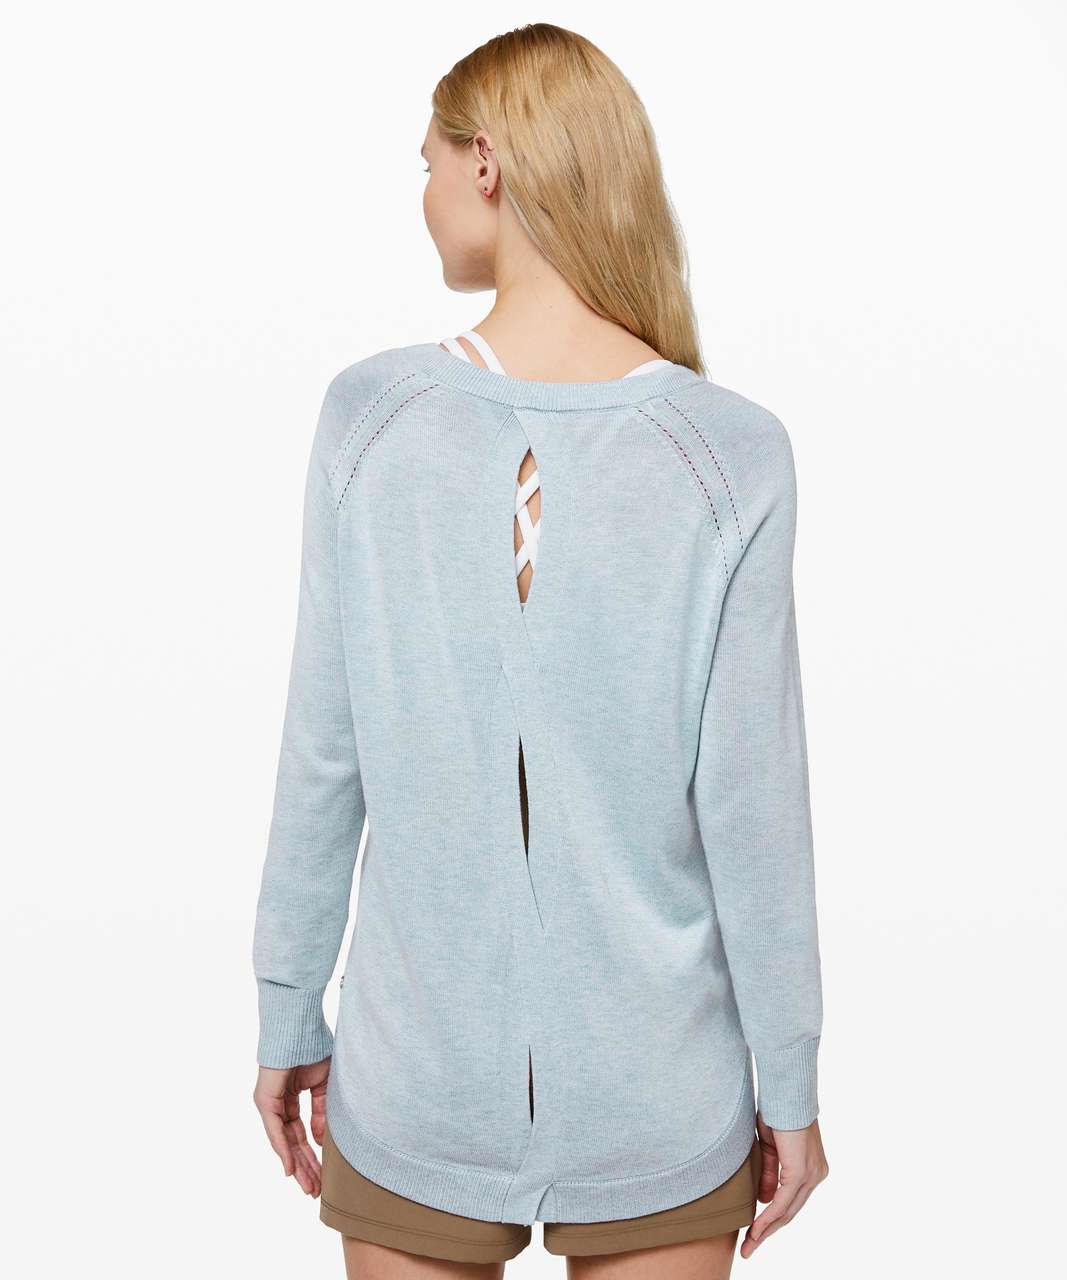 Lululemon's 'heavenly' $128 sweatshirt is on our wishlist for spring:  'Worth it